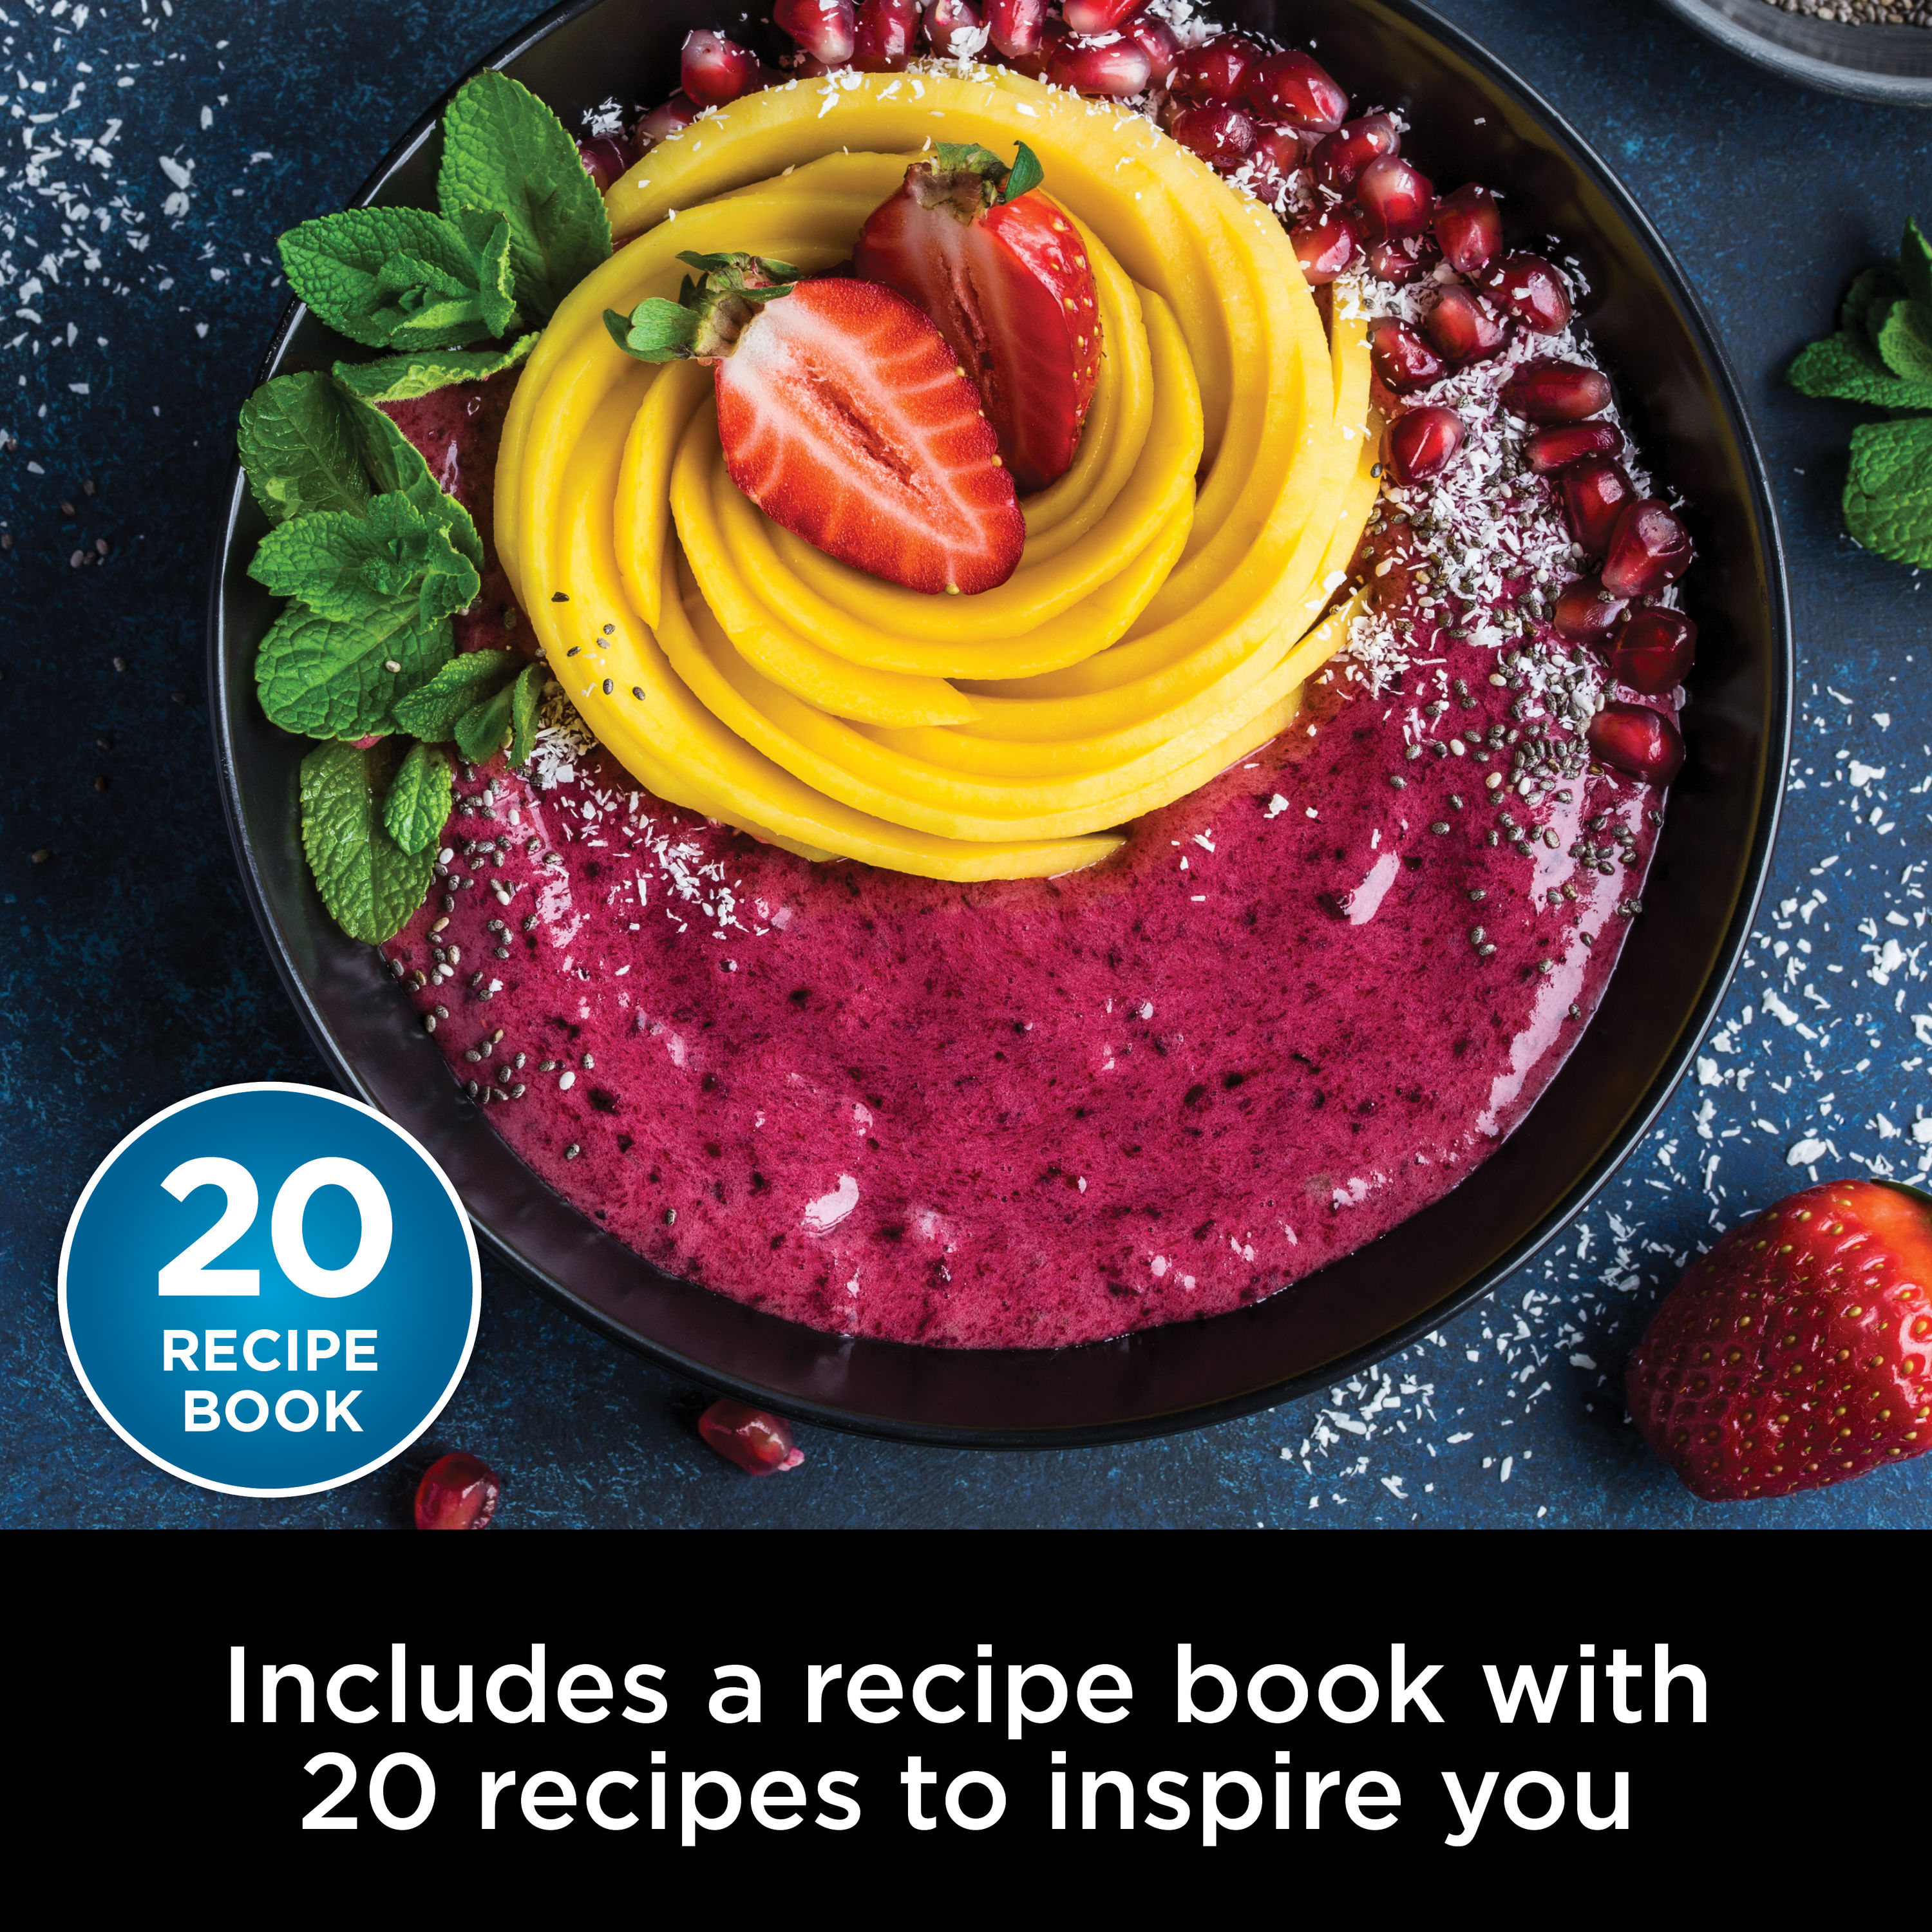 Ninja Foodi Power Blender Cookbook 2021-2022: Healthy and Amazing Recipes  That Unlock the Full Potential of Your Ninja Blender (Hardcover)